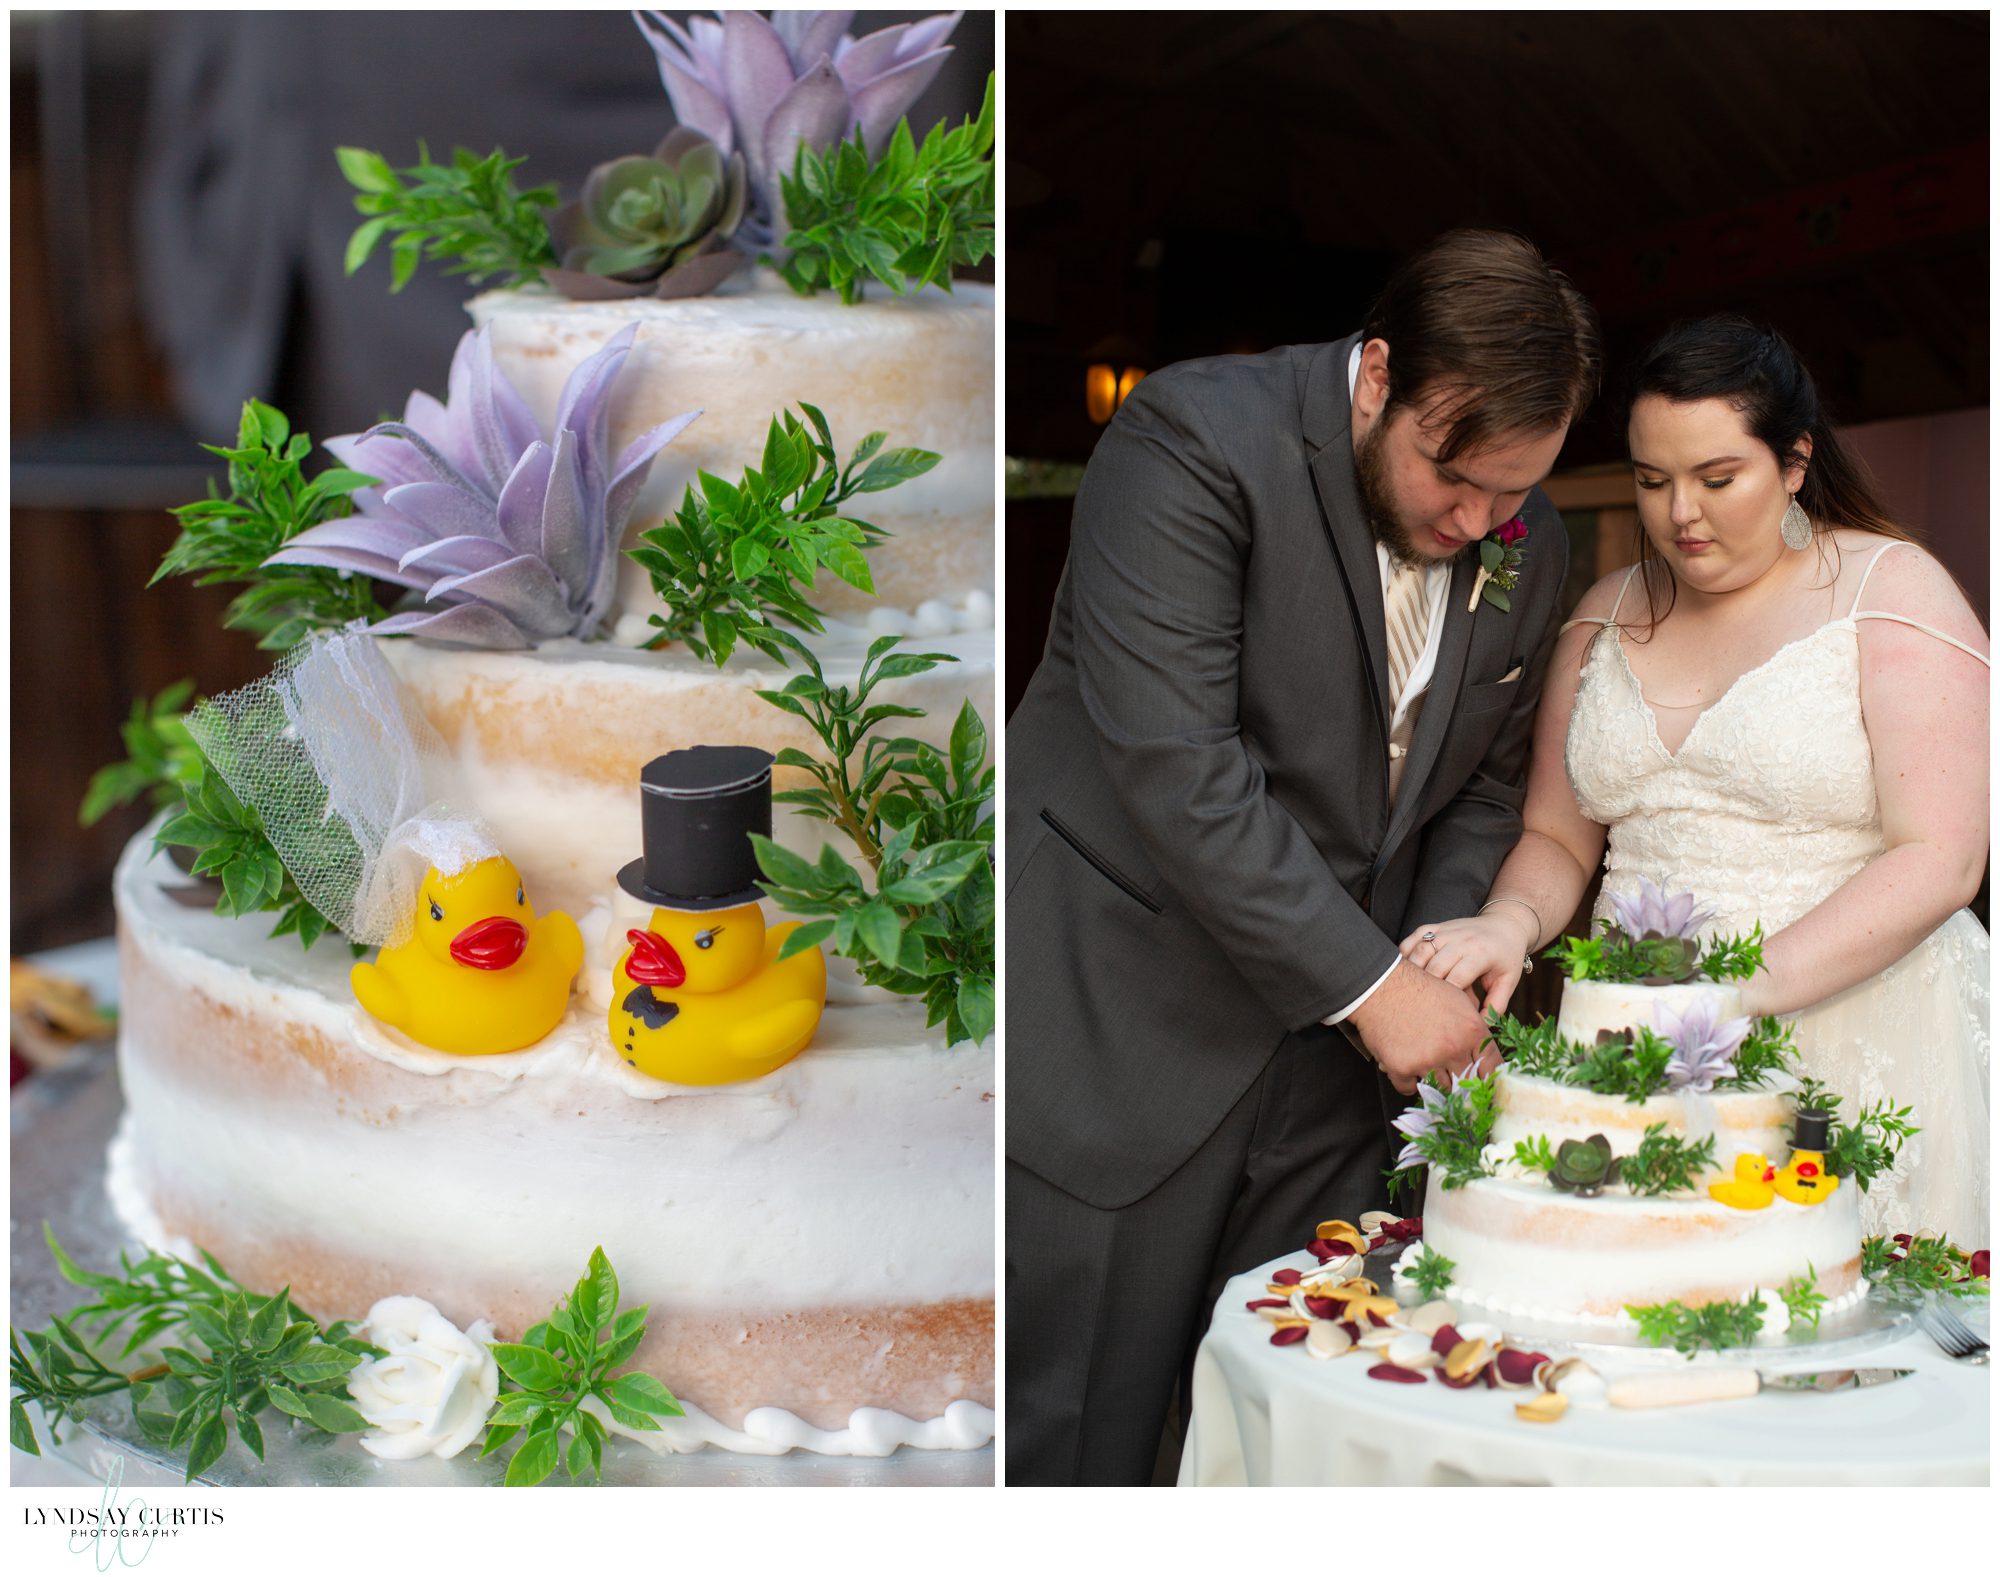 Virginia Beach wedding photographer Lyndsay Curtis Photography - Bride and Groom Cake cutting during wedding reception